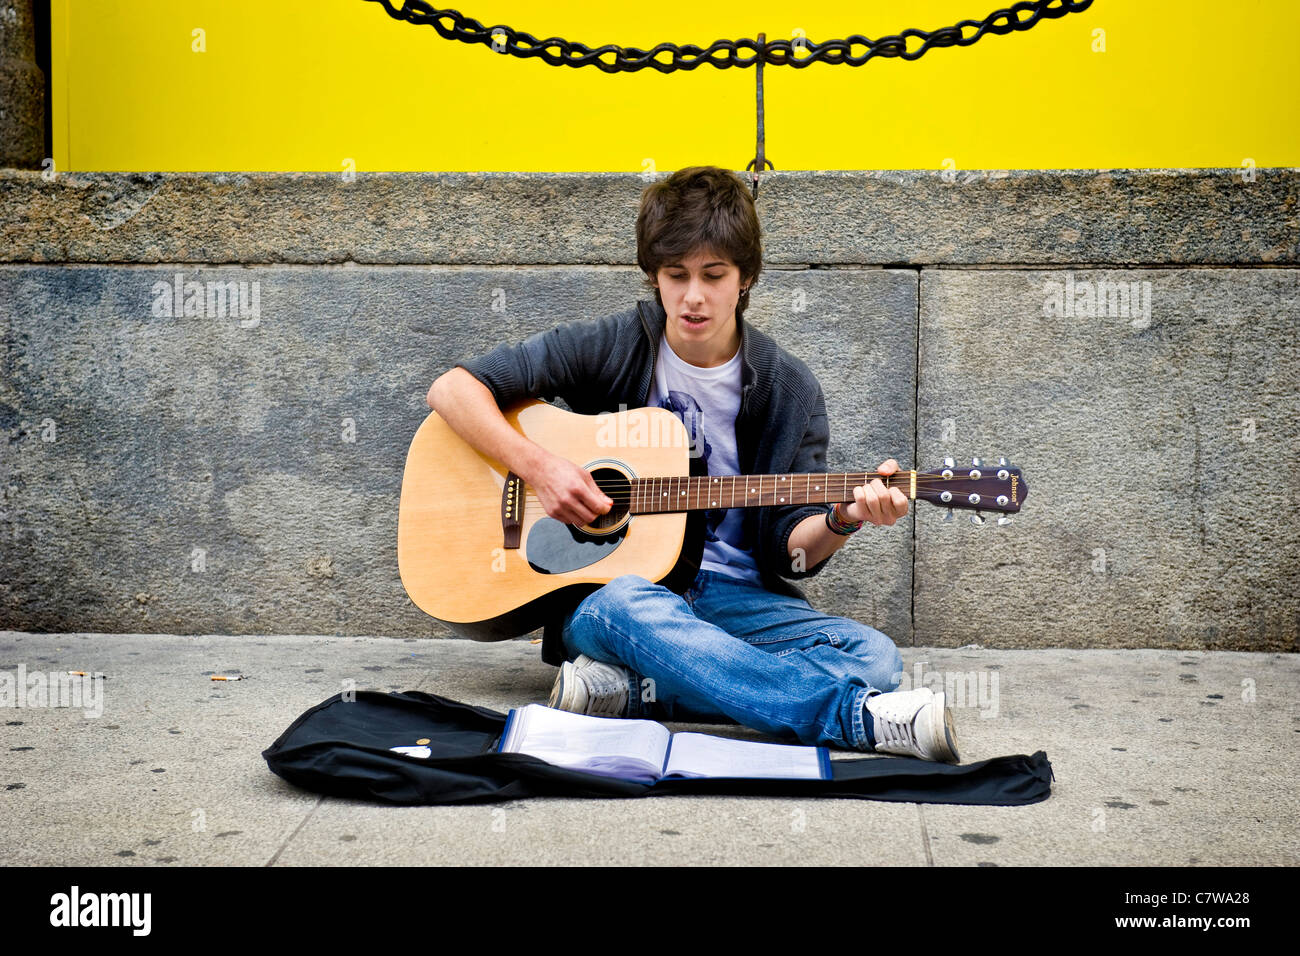 Teenage boy playing guitar in the street Stock Photo